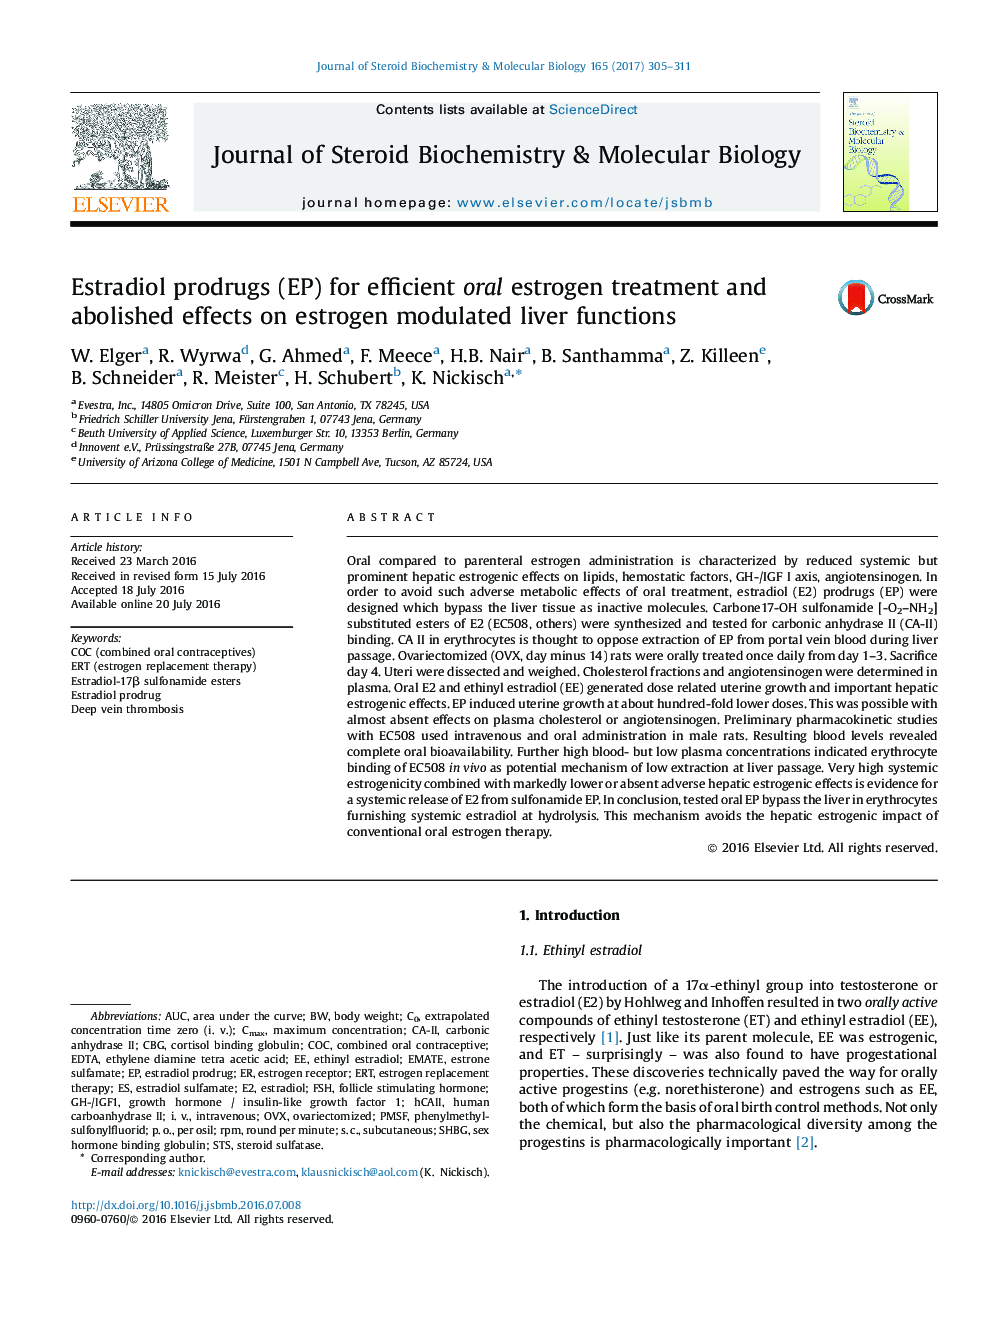 Estradiol prodrugs (EP) for efficient oral estrogen treatment and abolished effects on estrogen modulated liver functions